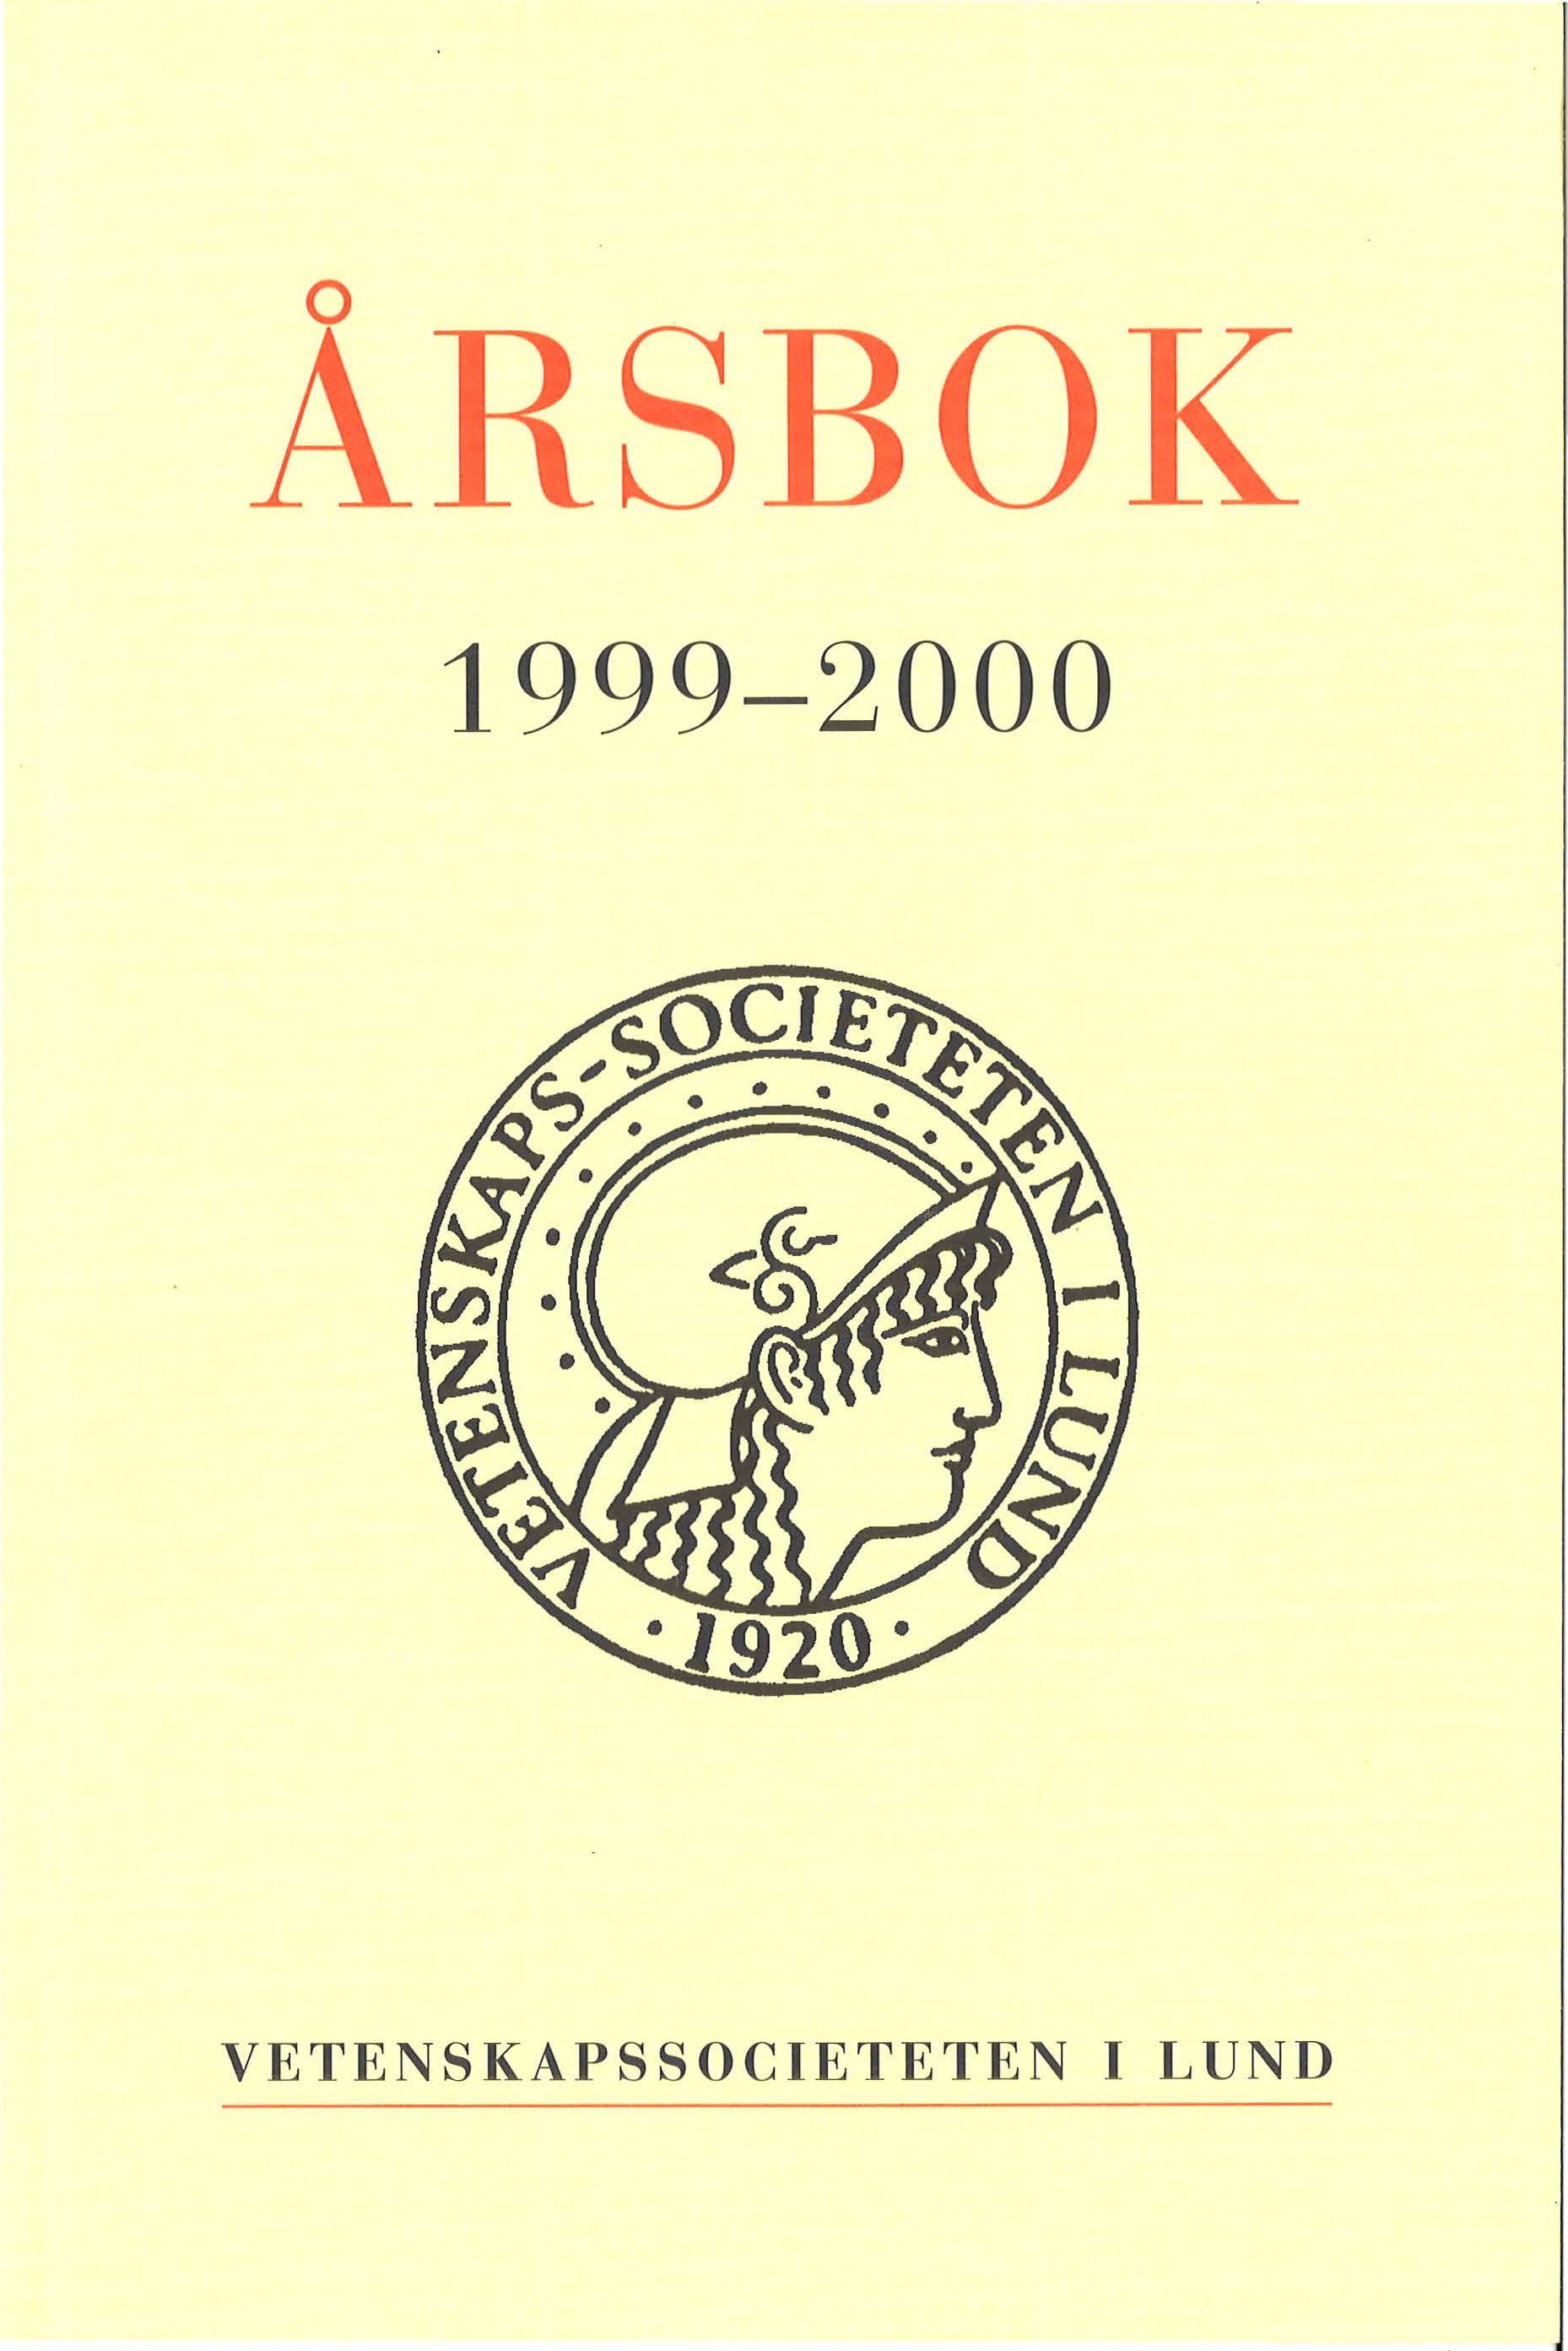 					Visa Årsbok 1999-2000
				